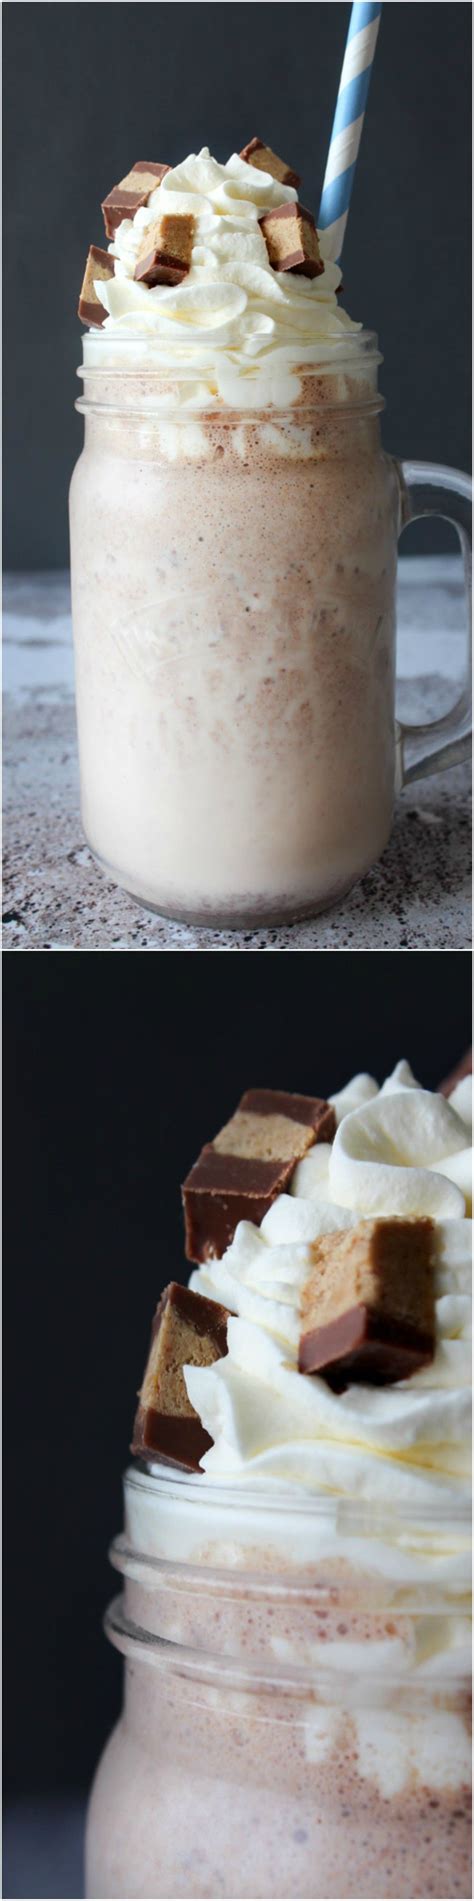 Replay how to make the perfect milkshake. Reese's Peanut Butter Cup Milkshake - Homemade Milkshake - Peanut butter Milkshak… | Homemade ...